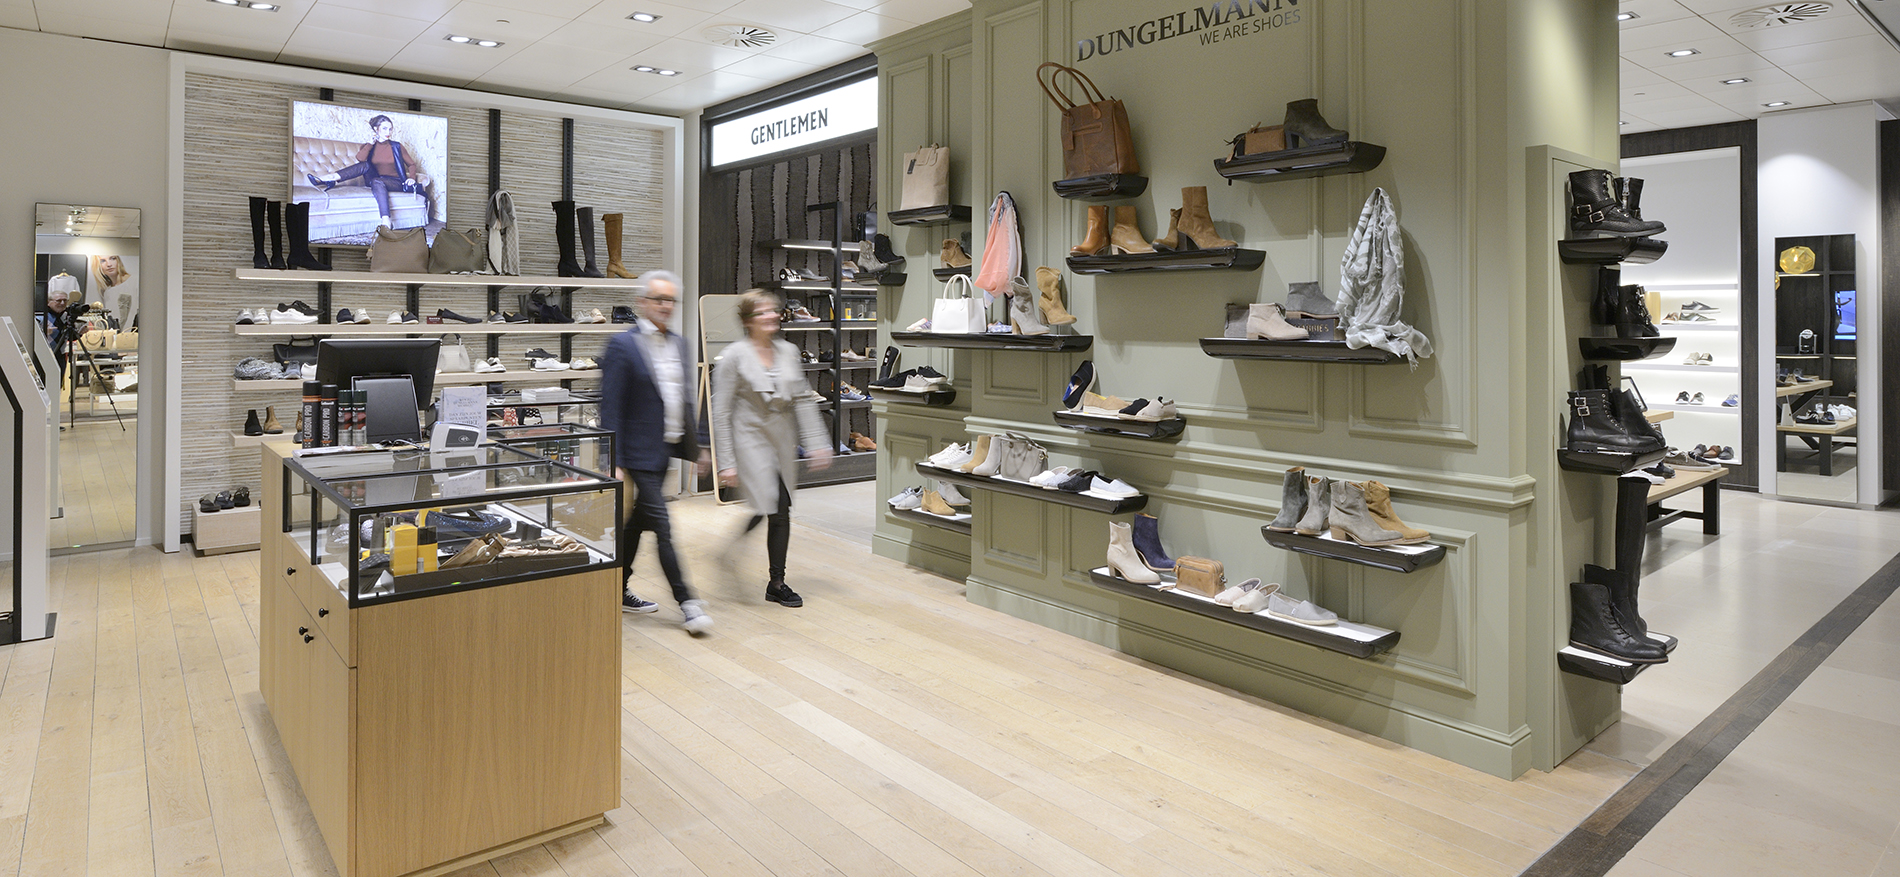 Shop-in-shop Dungelmann Chaussures dans Berden Mode à Uden - Chaussures